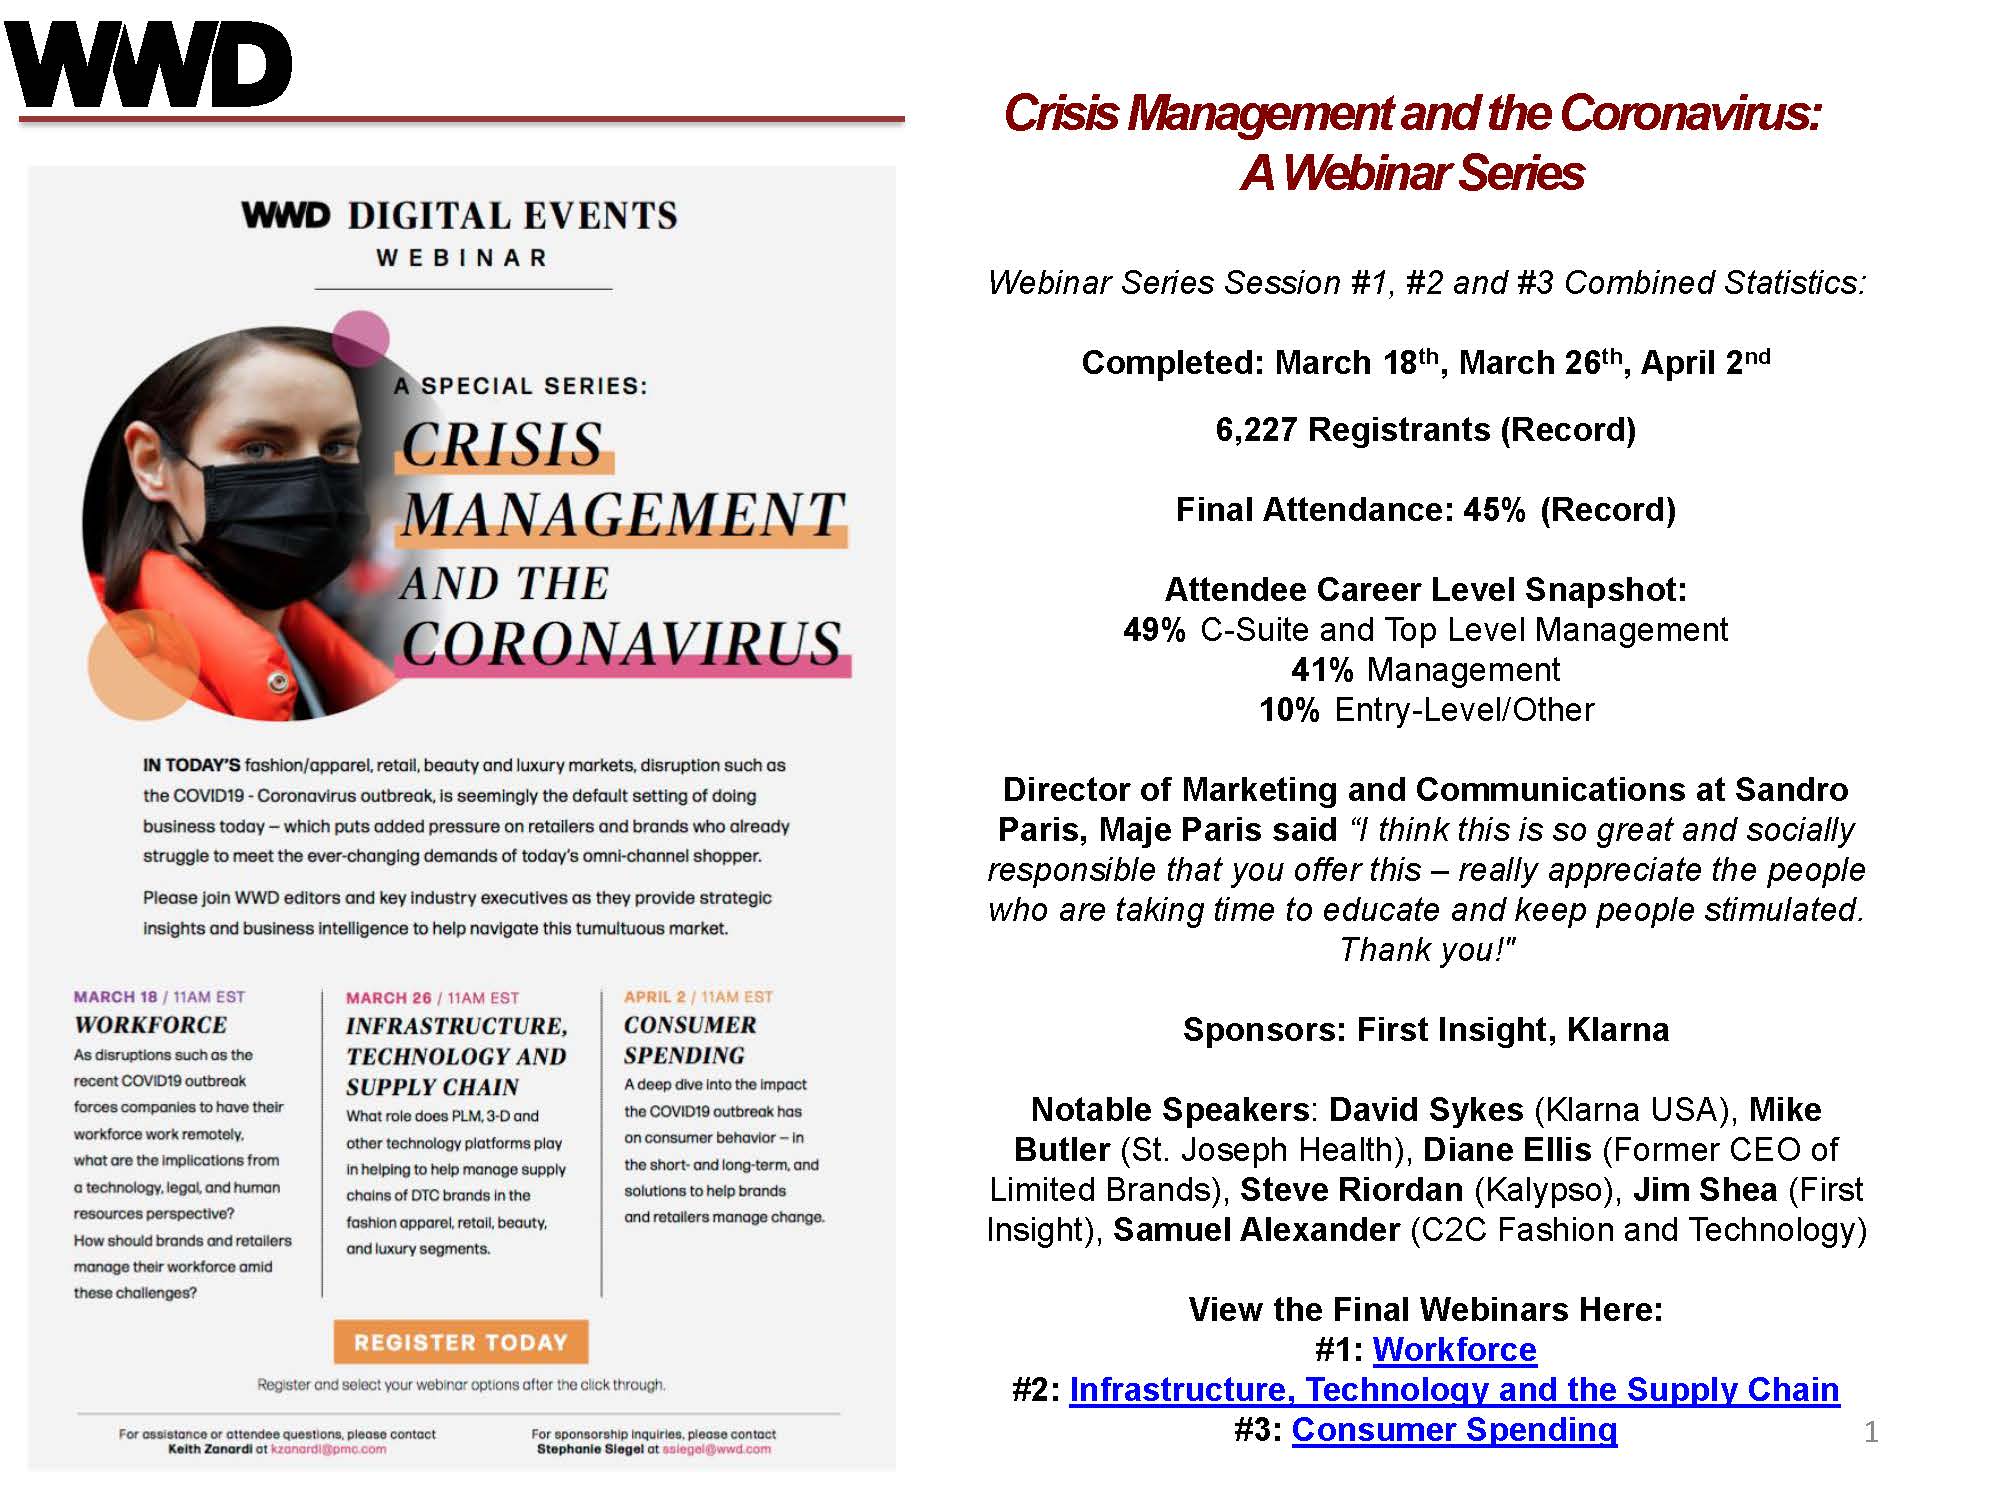 Crisis Management Series Highlights